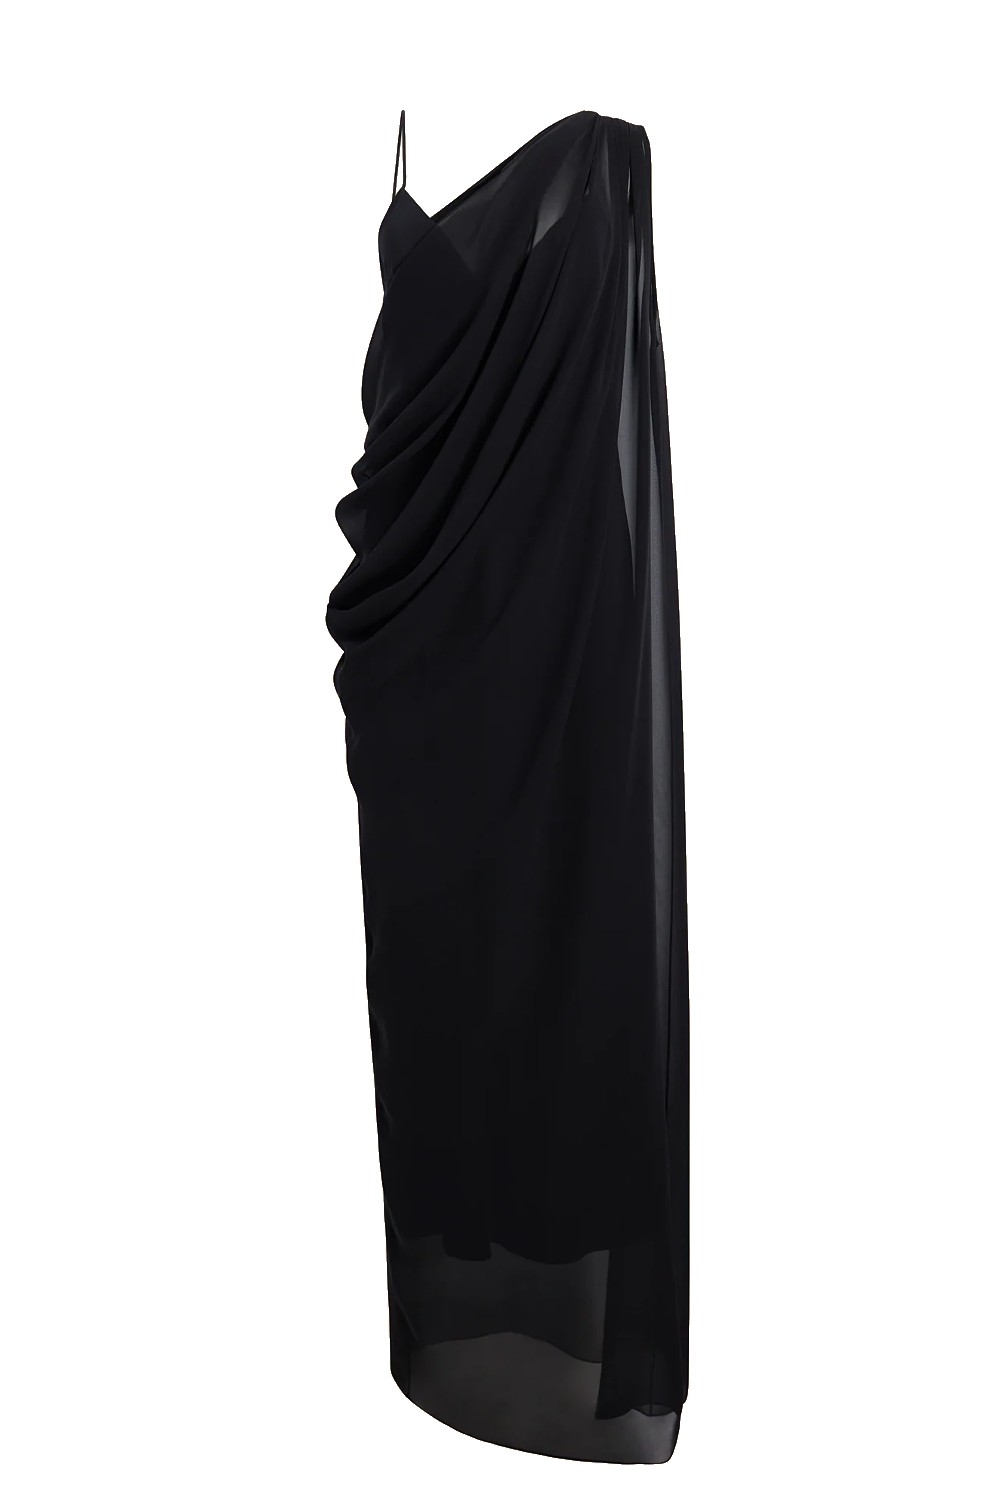 Khaite-Black-Dress